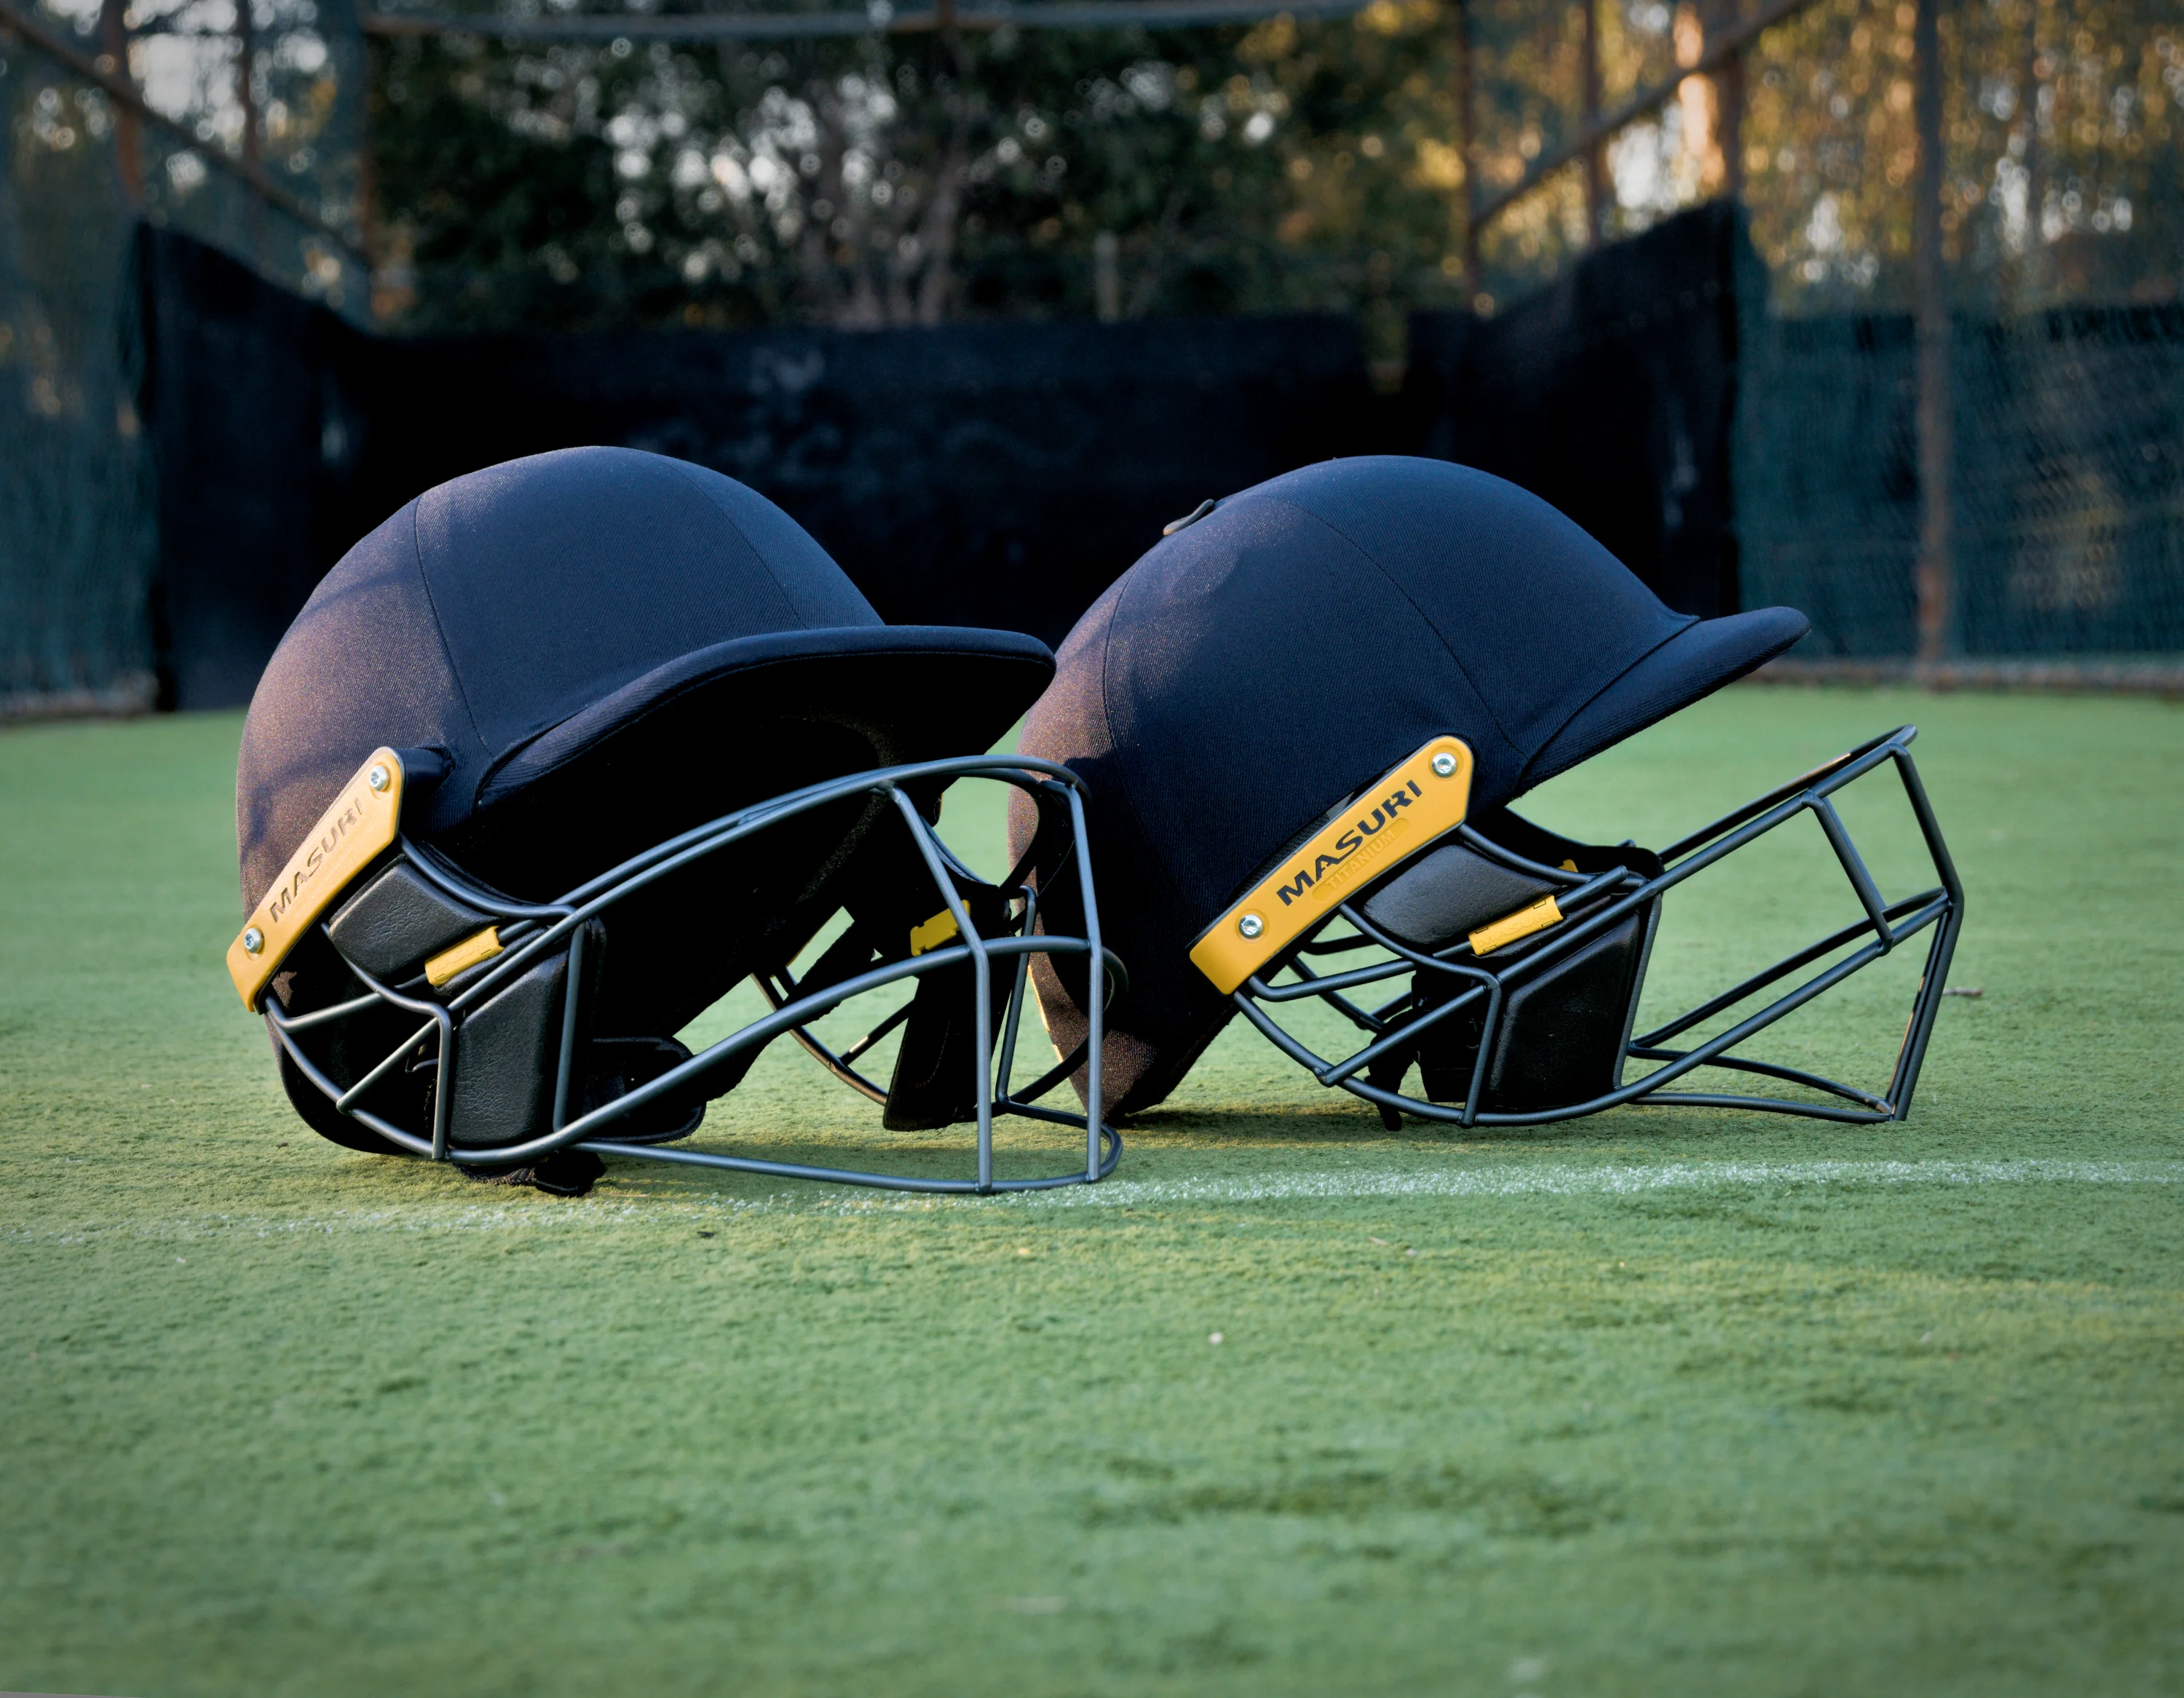 Masuri E Line Cricket Helmets